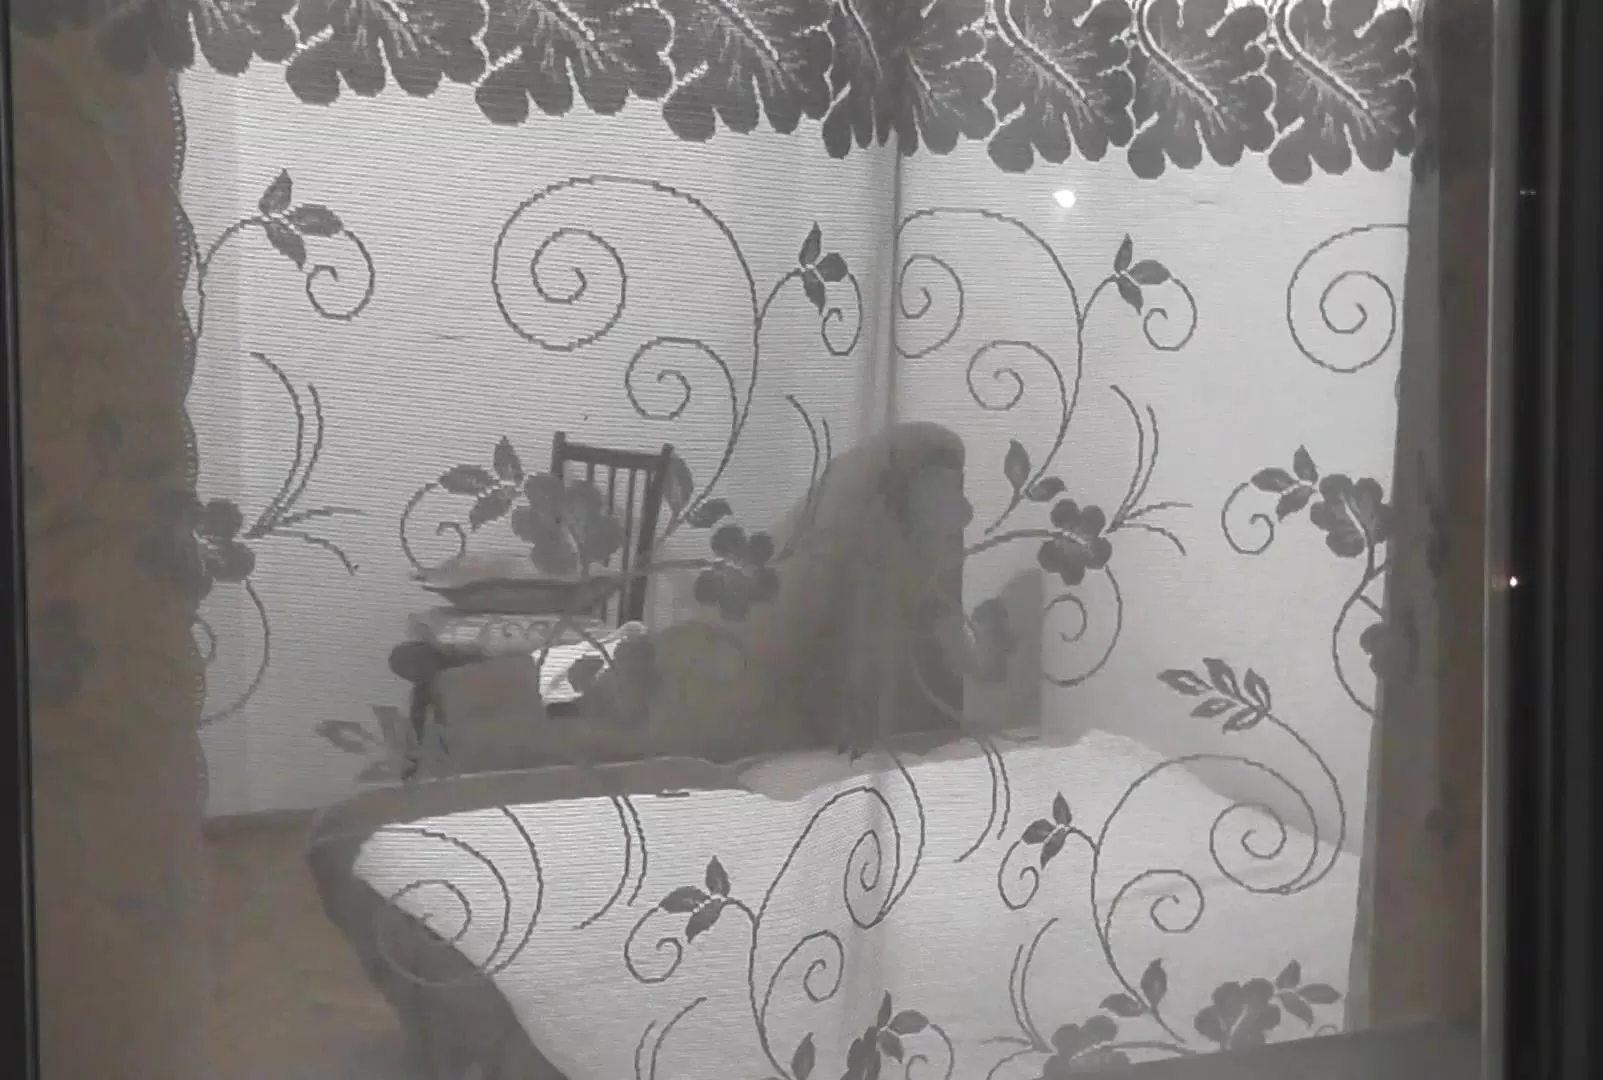 Peeping. Spy. Spying. Voyeur. Neighbour chap in evening looks into bedroom  window of a nude woman